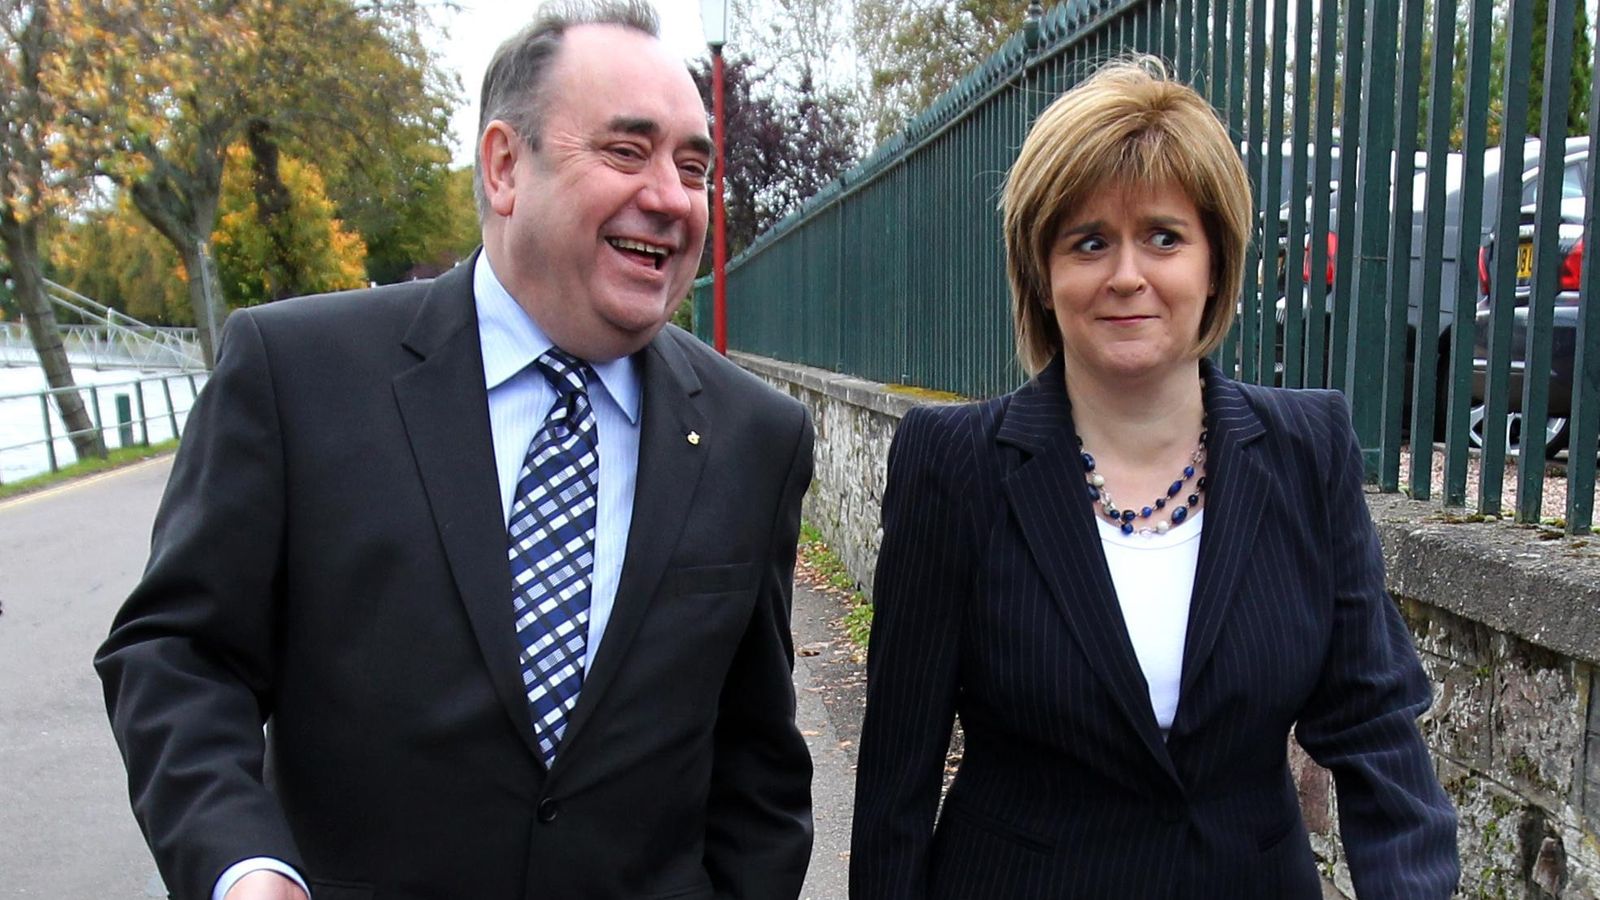 Alex Salmond launches legal action against Scottish government